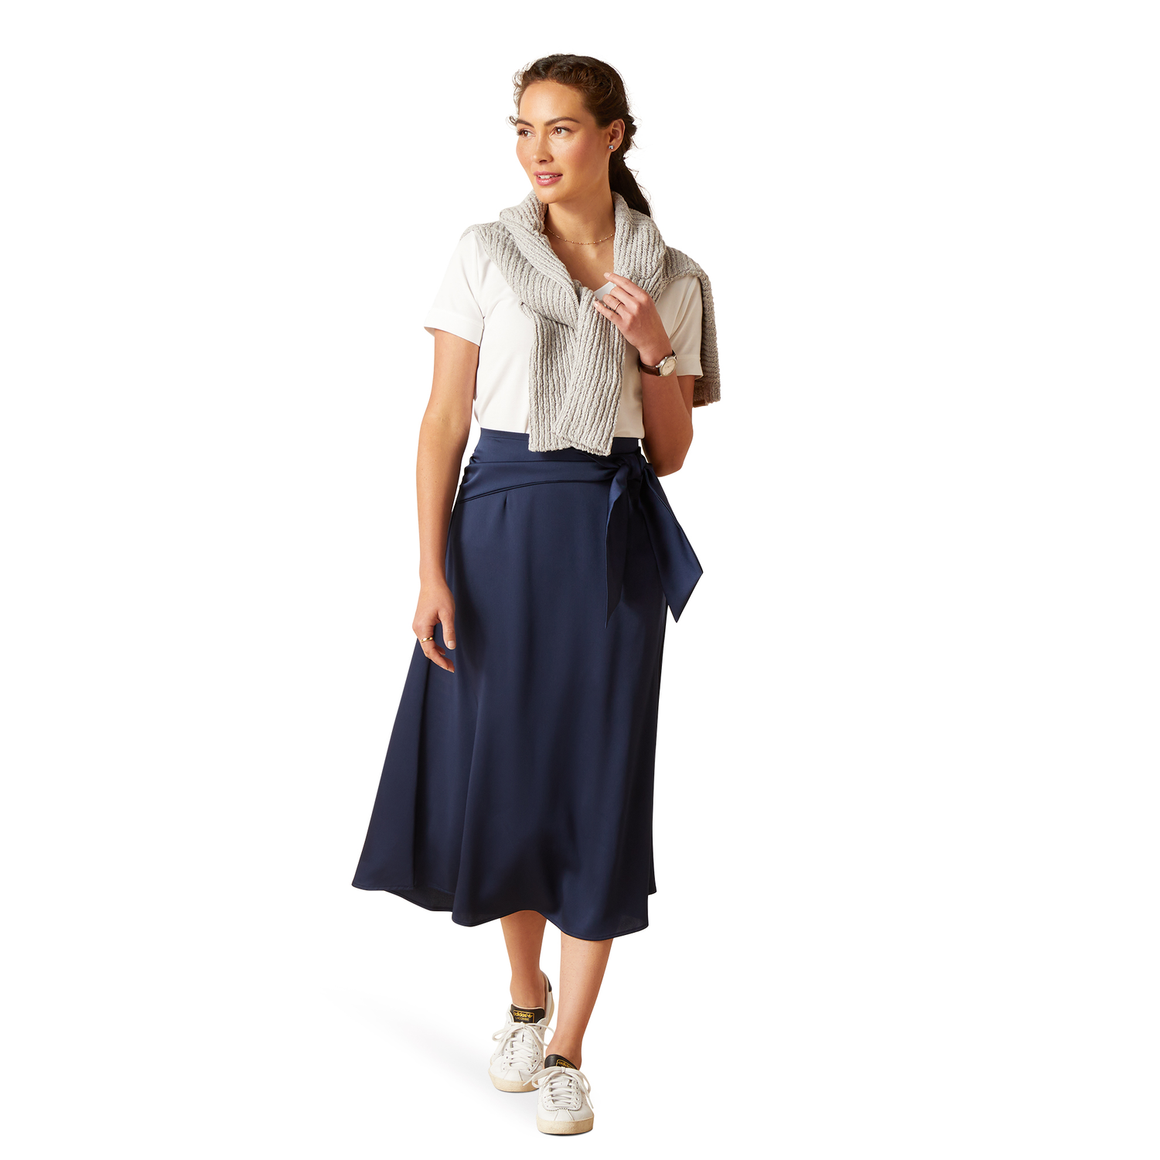 Ariat Women's Salcombe Skirt - Navy